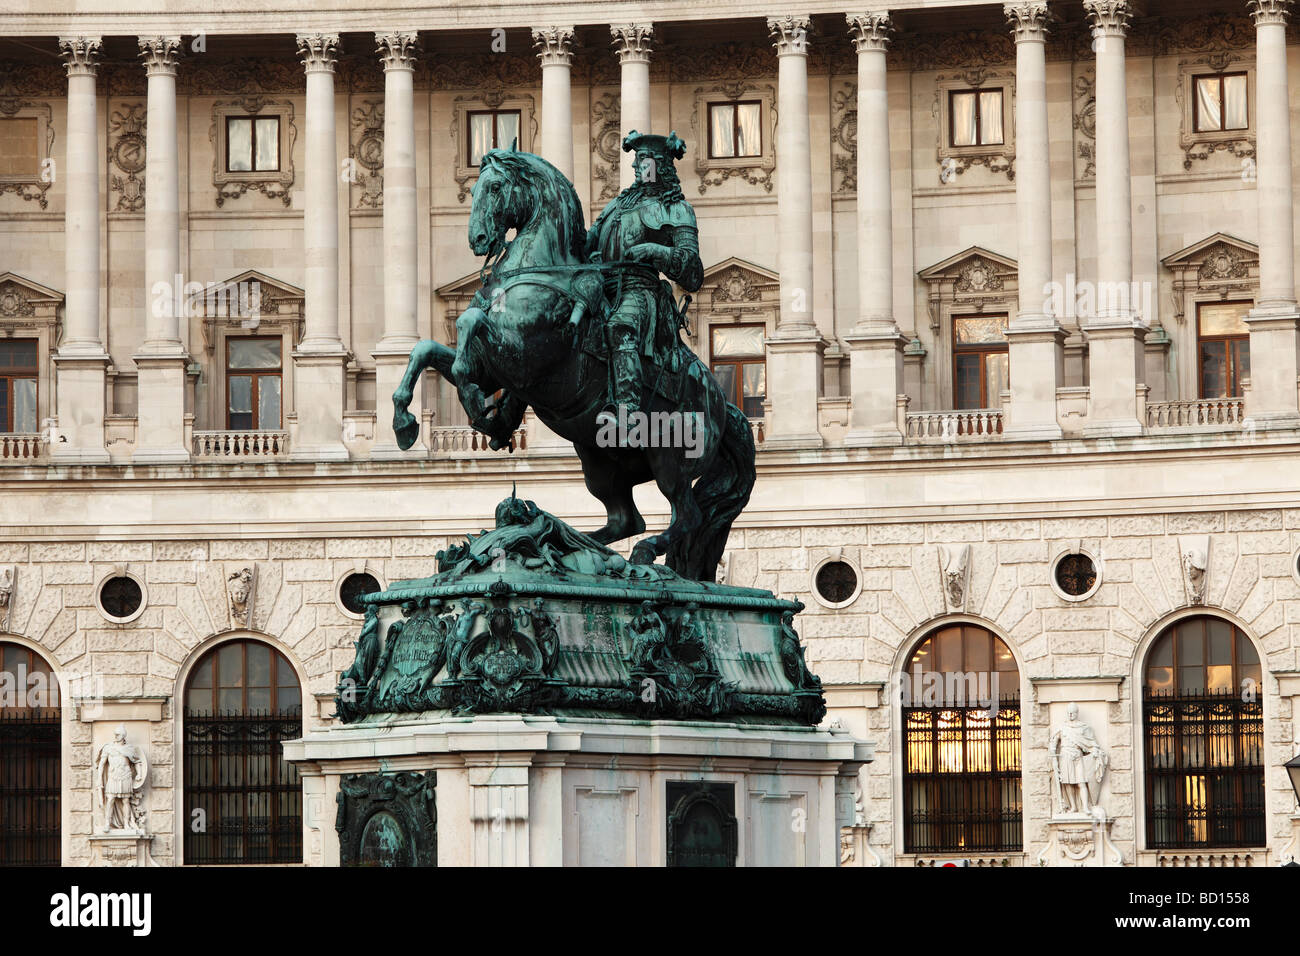 Prince Eugen equestrian statue, Hofburg Imperial Palace, Heldenplatz Heroes' Square, Vienna, Austria, Europe Stock Photo